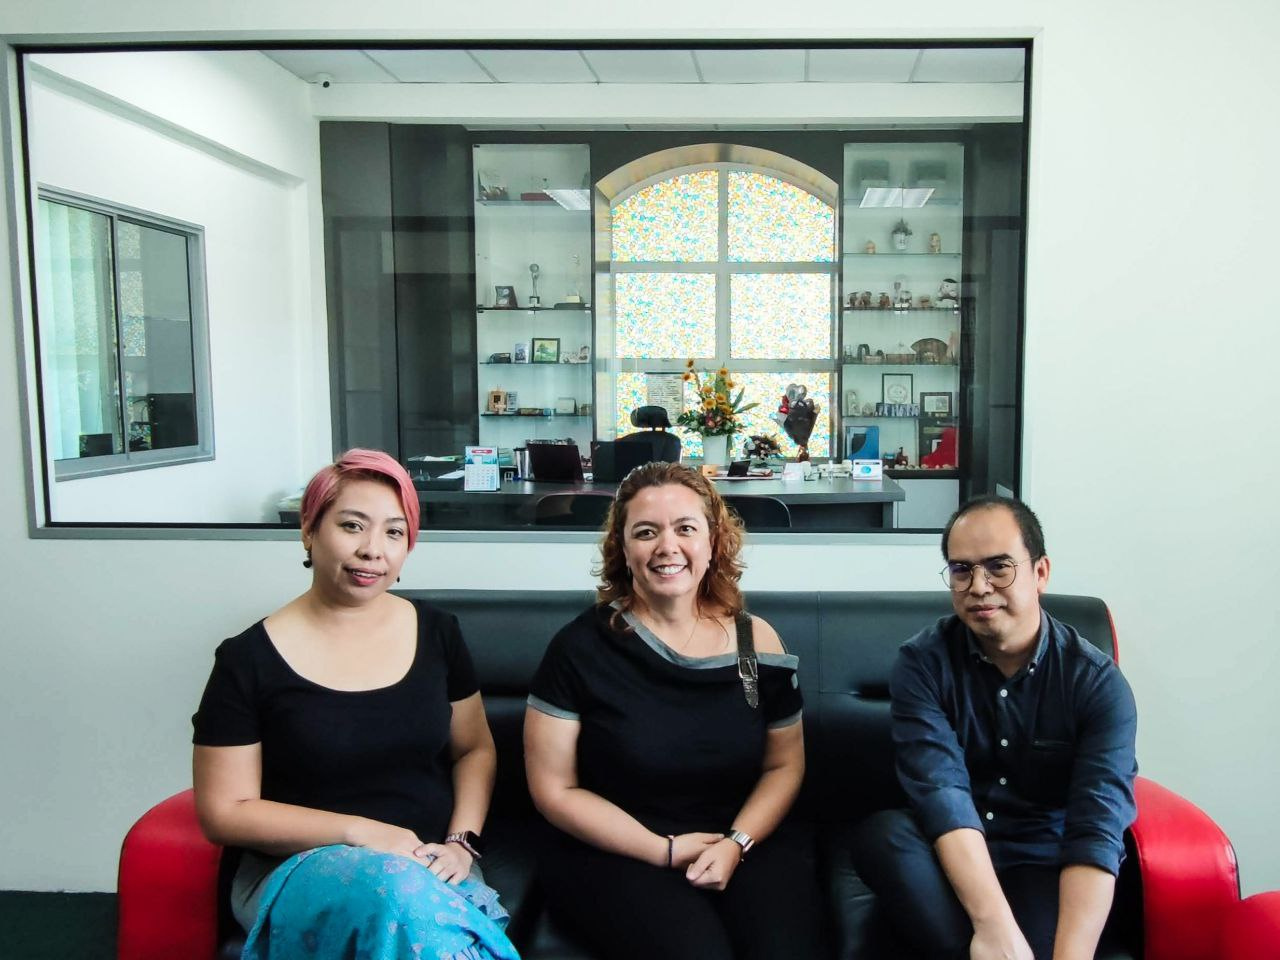 Founders of SM Health Care Sdn Bhd, Helga Smith, Paulus Lagadan, and Amilia Alcantra, seated together.